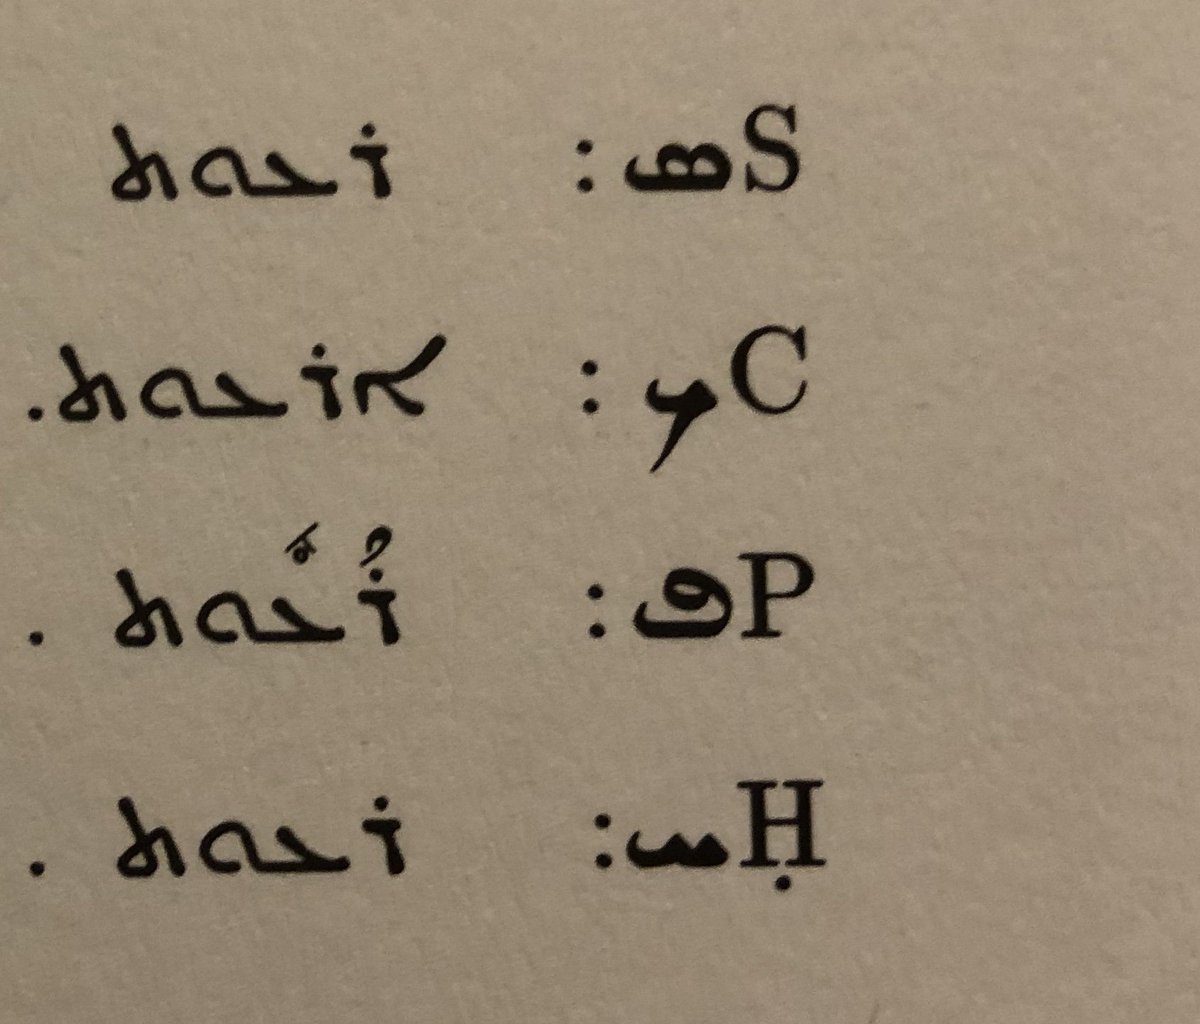 The etymology of Ruth (רוּת) as 'friendship' or 'female companion' (רְעוּת) is confirmed by the Syriac translation of the OT & Syriac translations of Matthew 1:5 (shown below).